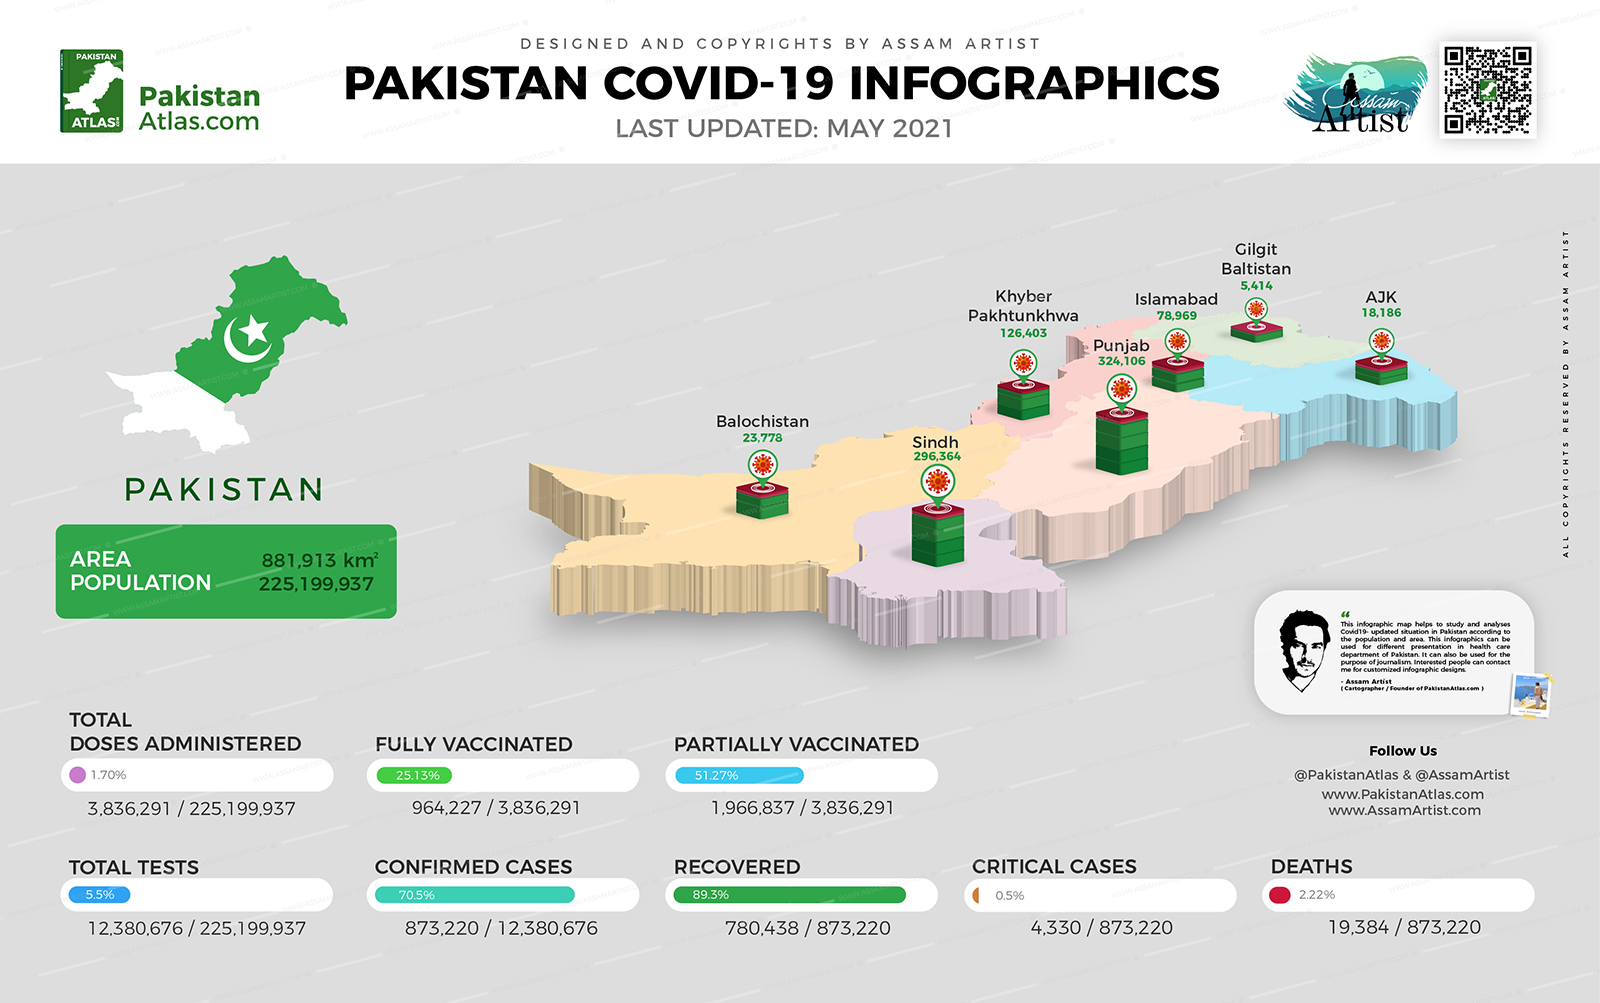 Pakistan COVID-19 Infographic Map